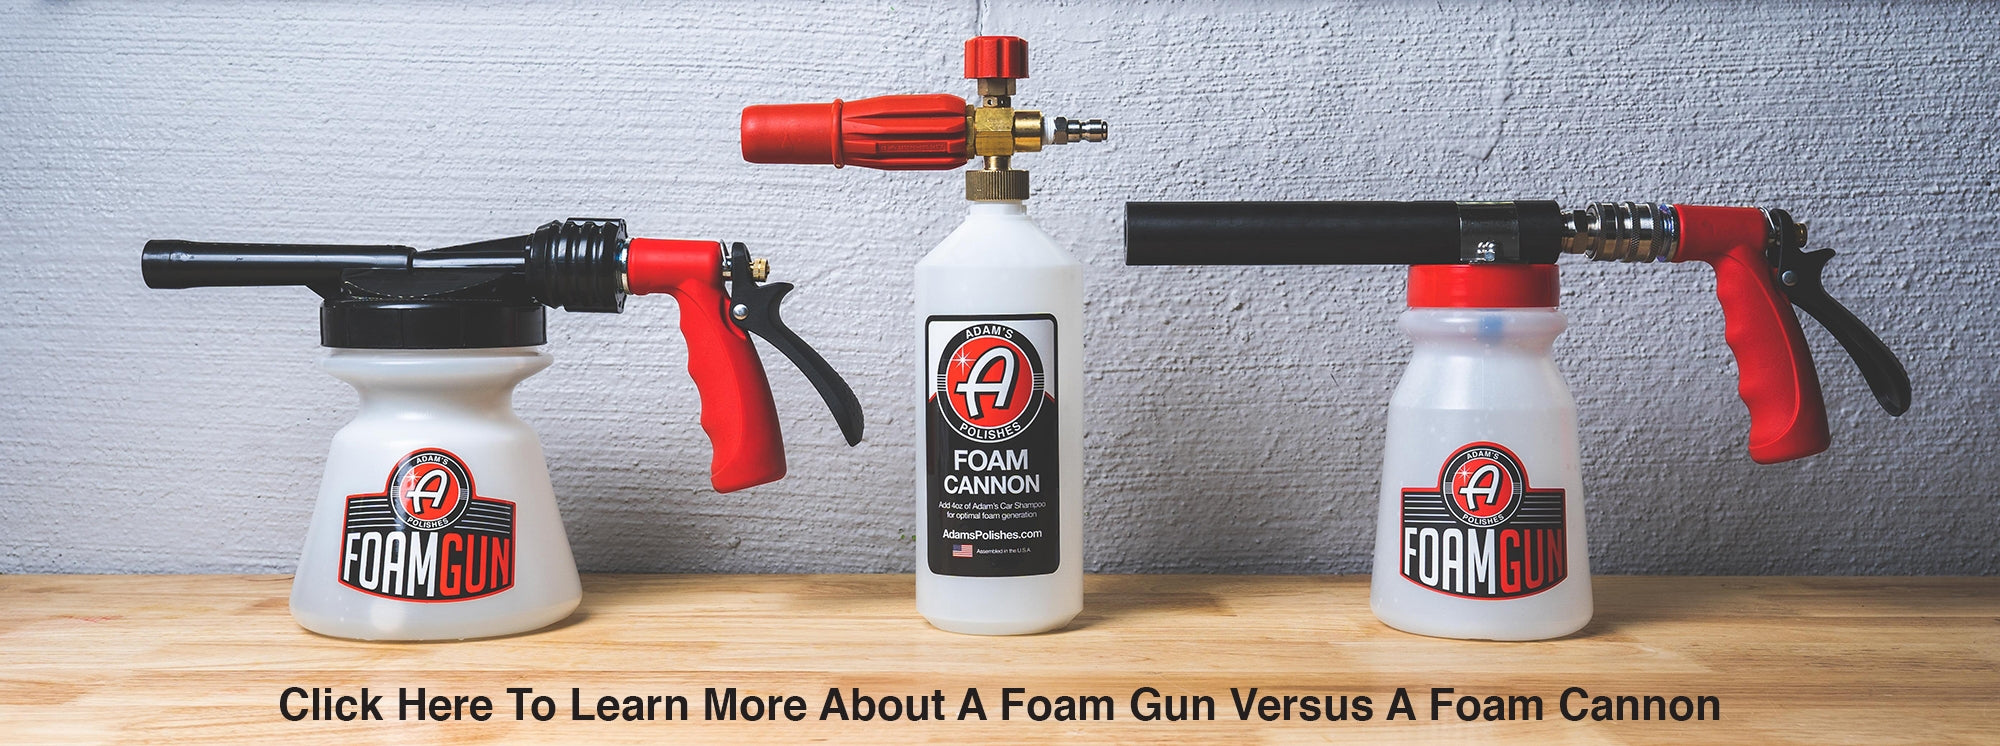 Adam's Premium Foam Cannon Unboxing and Review!